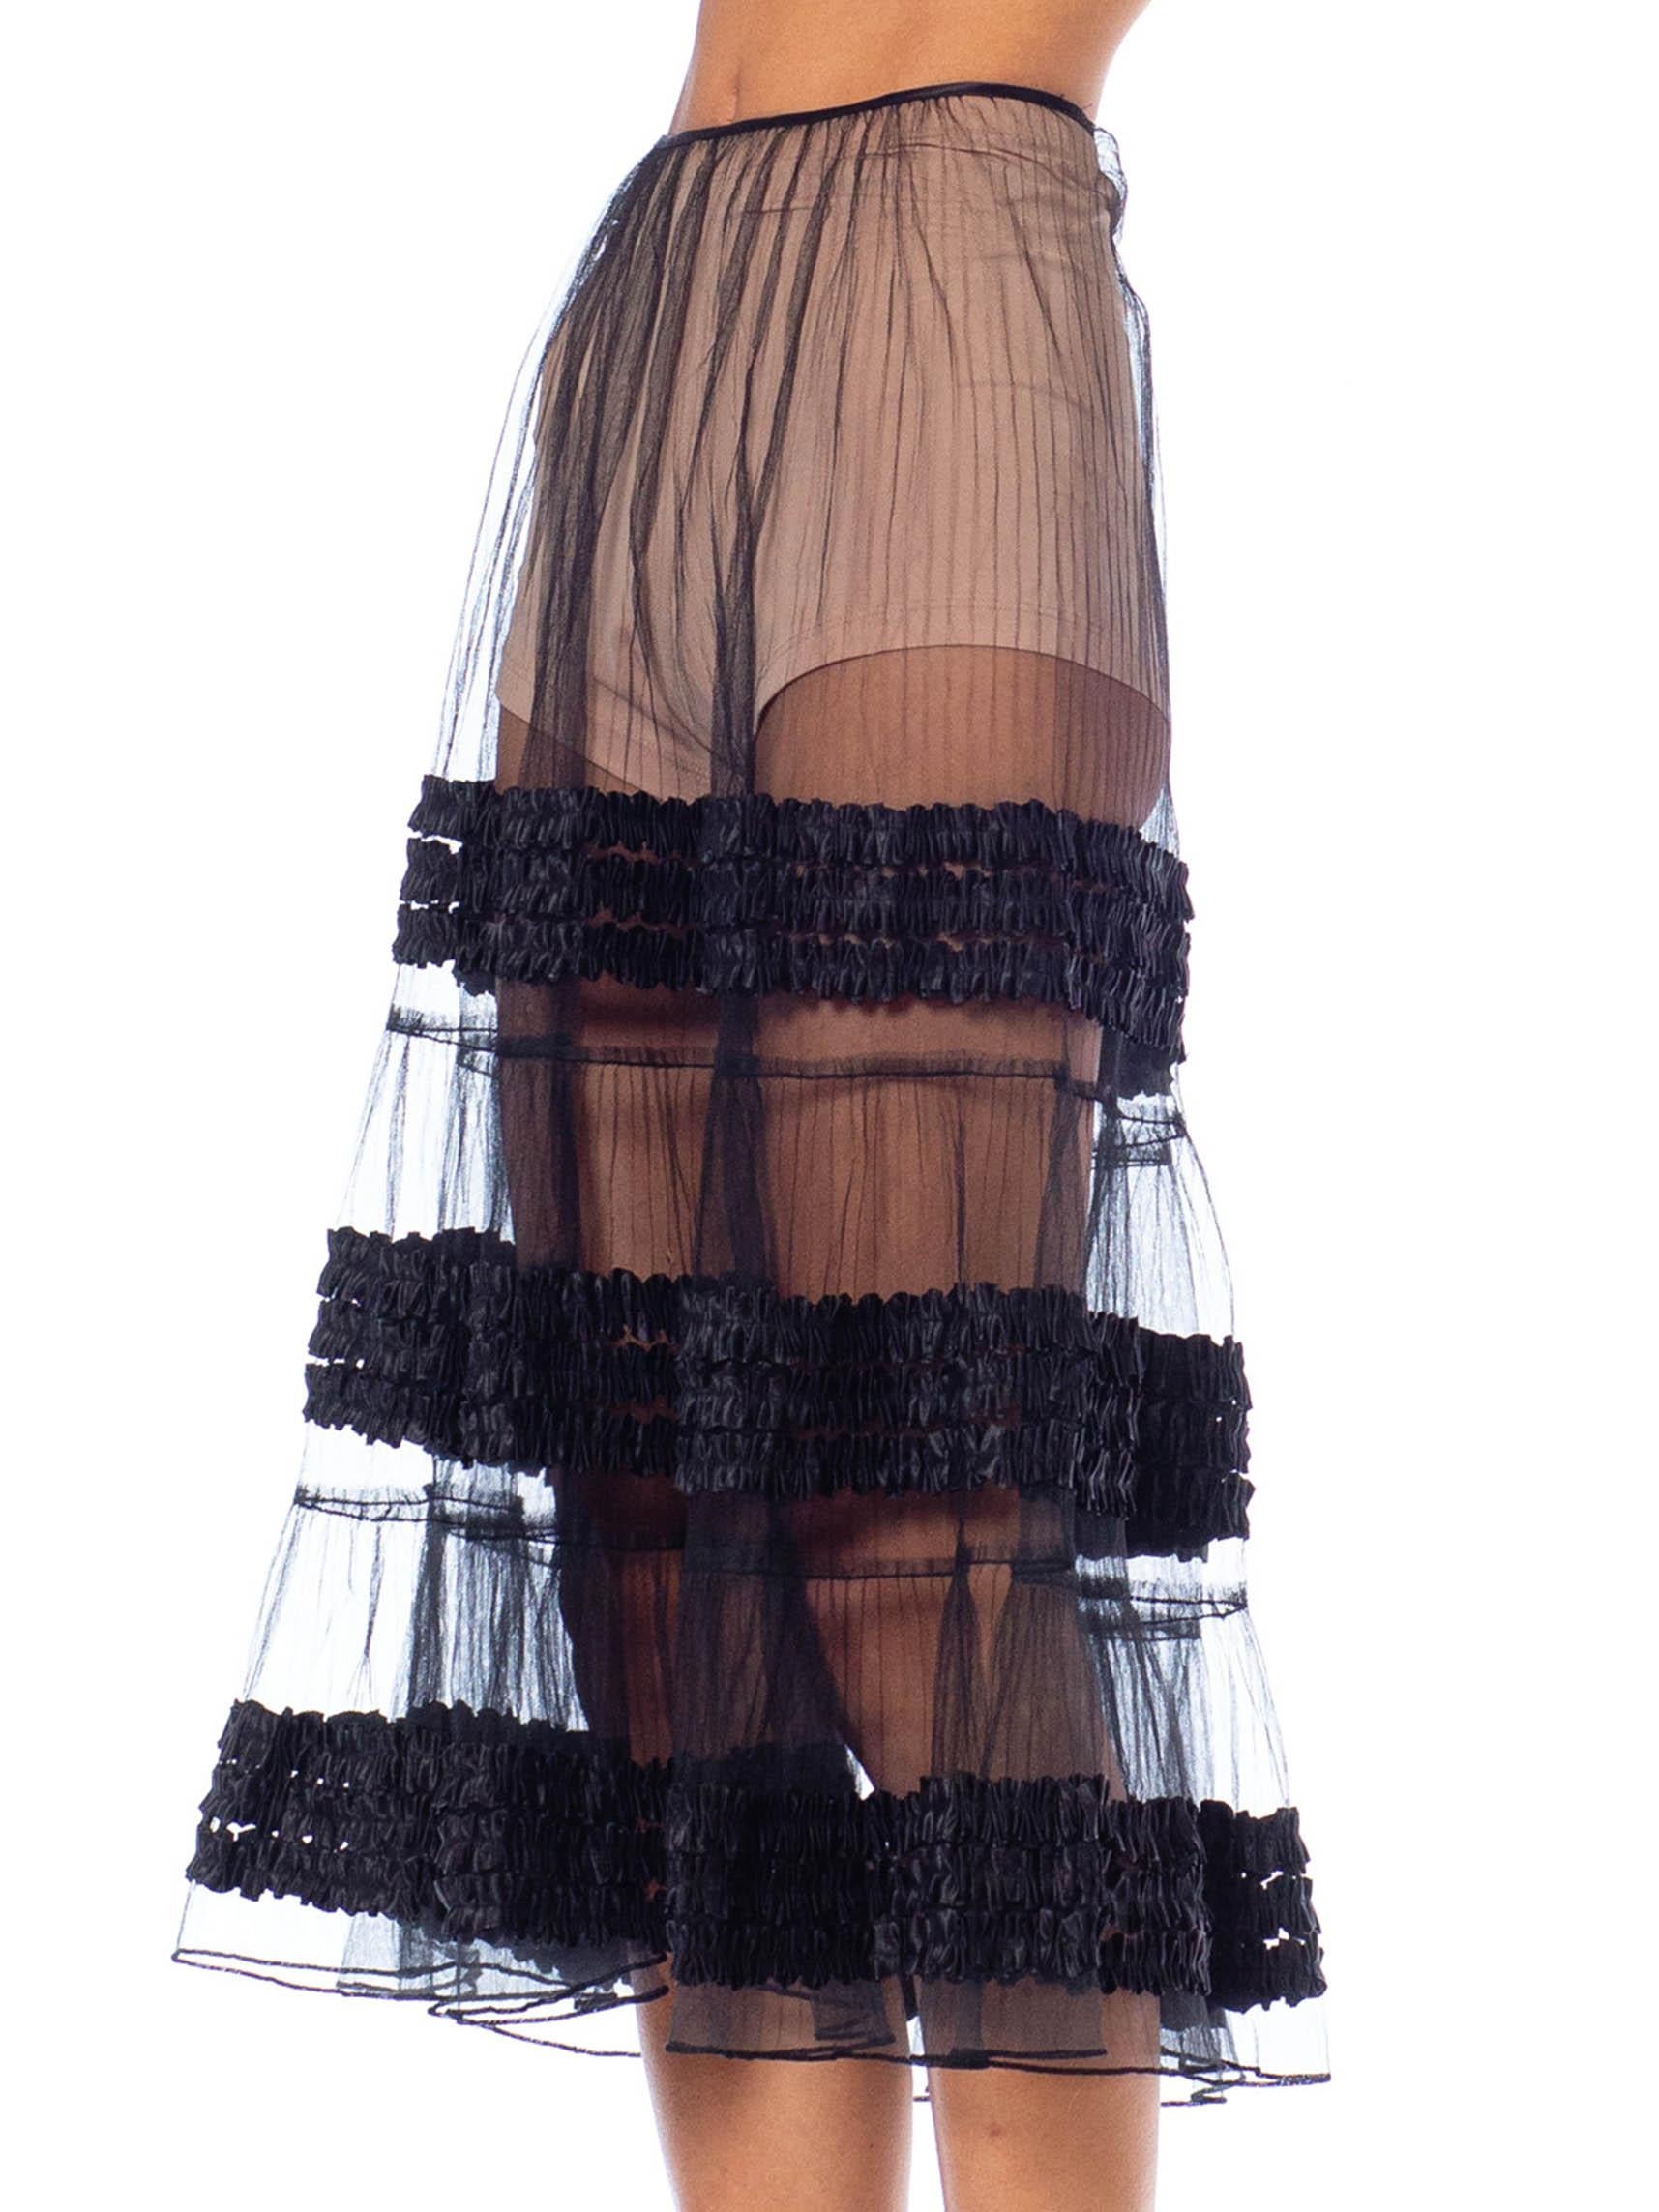 1950S Black Sheer Poly/Nylon Tulle Petticoat Skirt With Satin Ribbon Ruffles 3